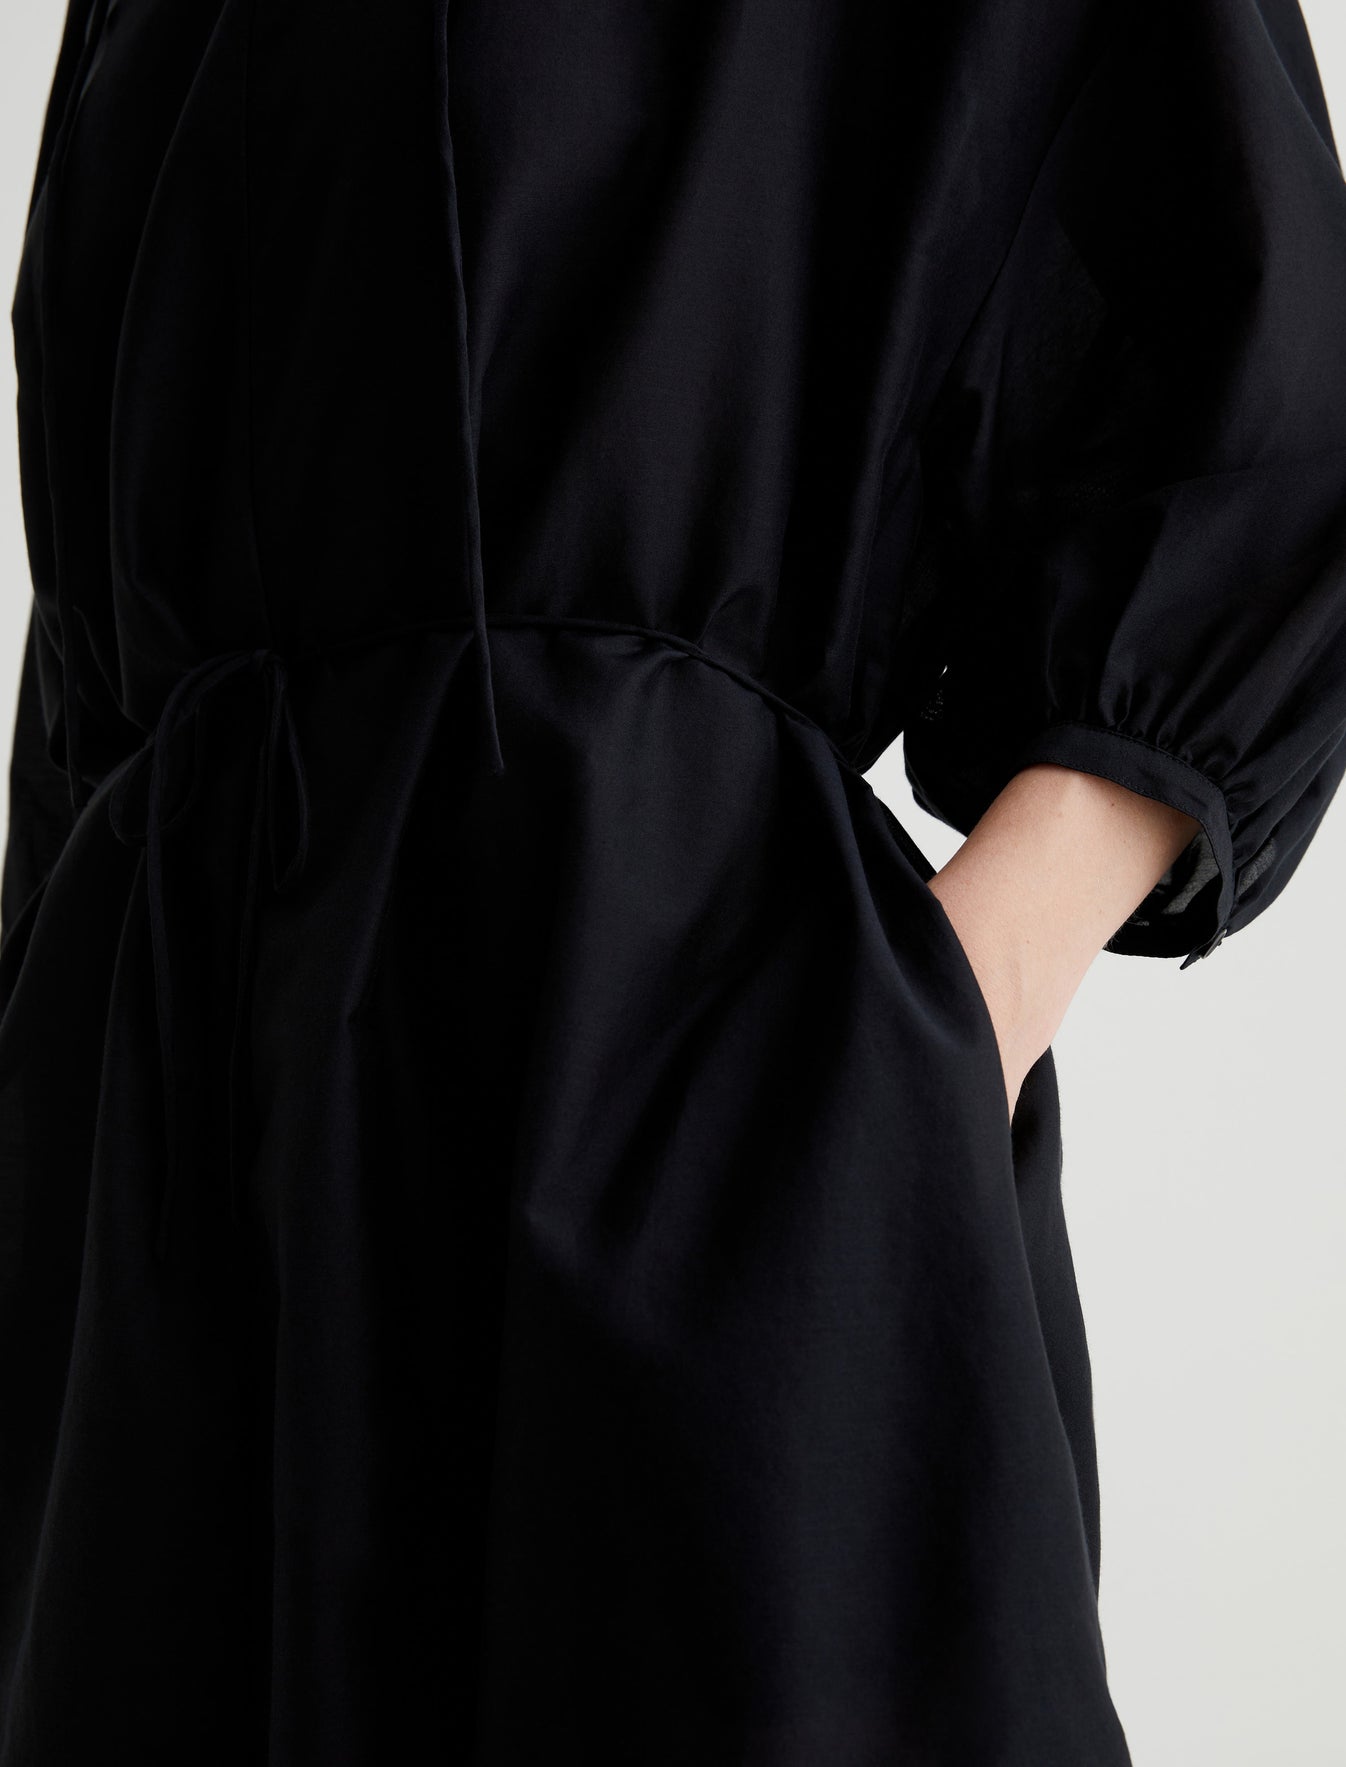 Octavia Dress True Black Peasant Shirt Dress Women Top Photo 5